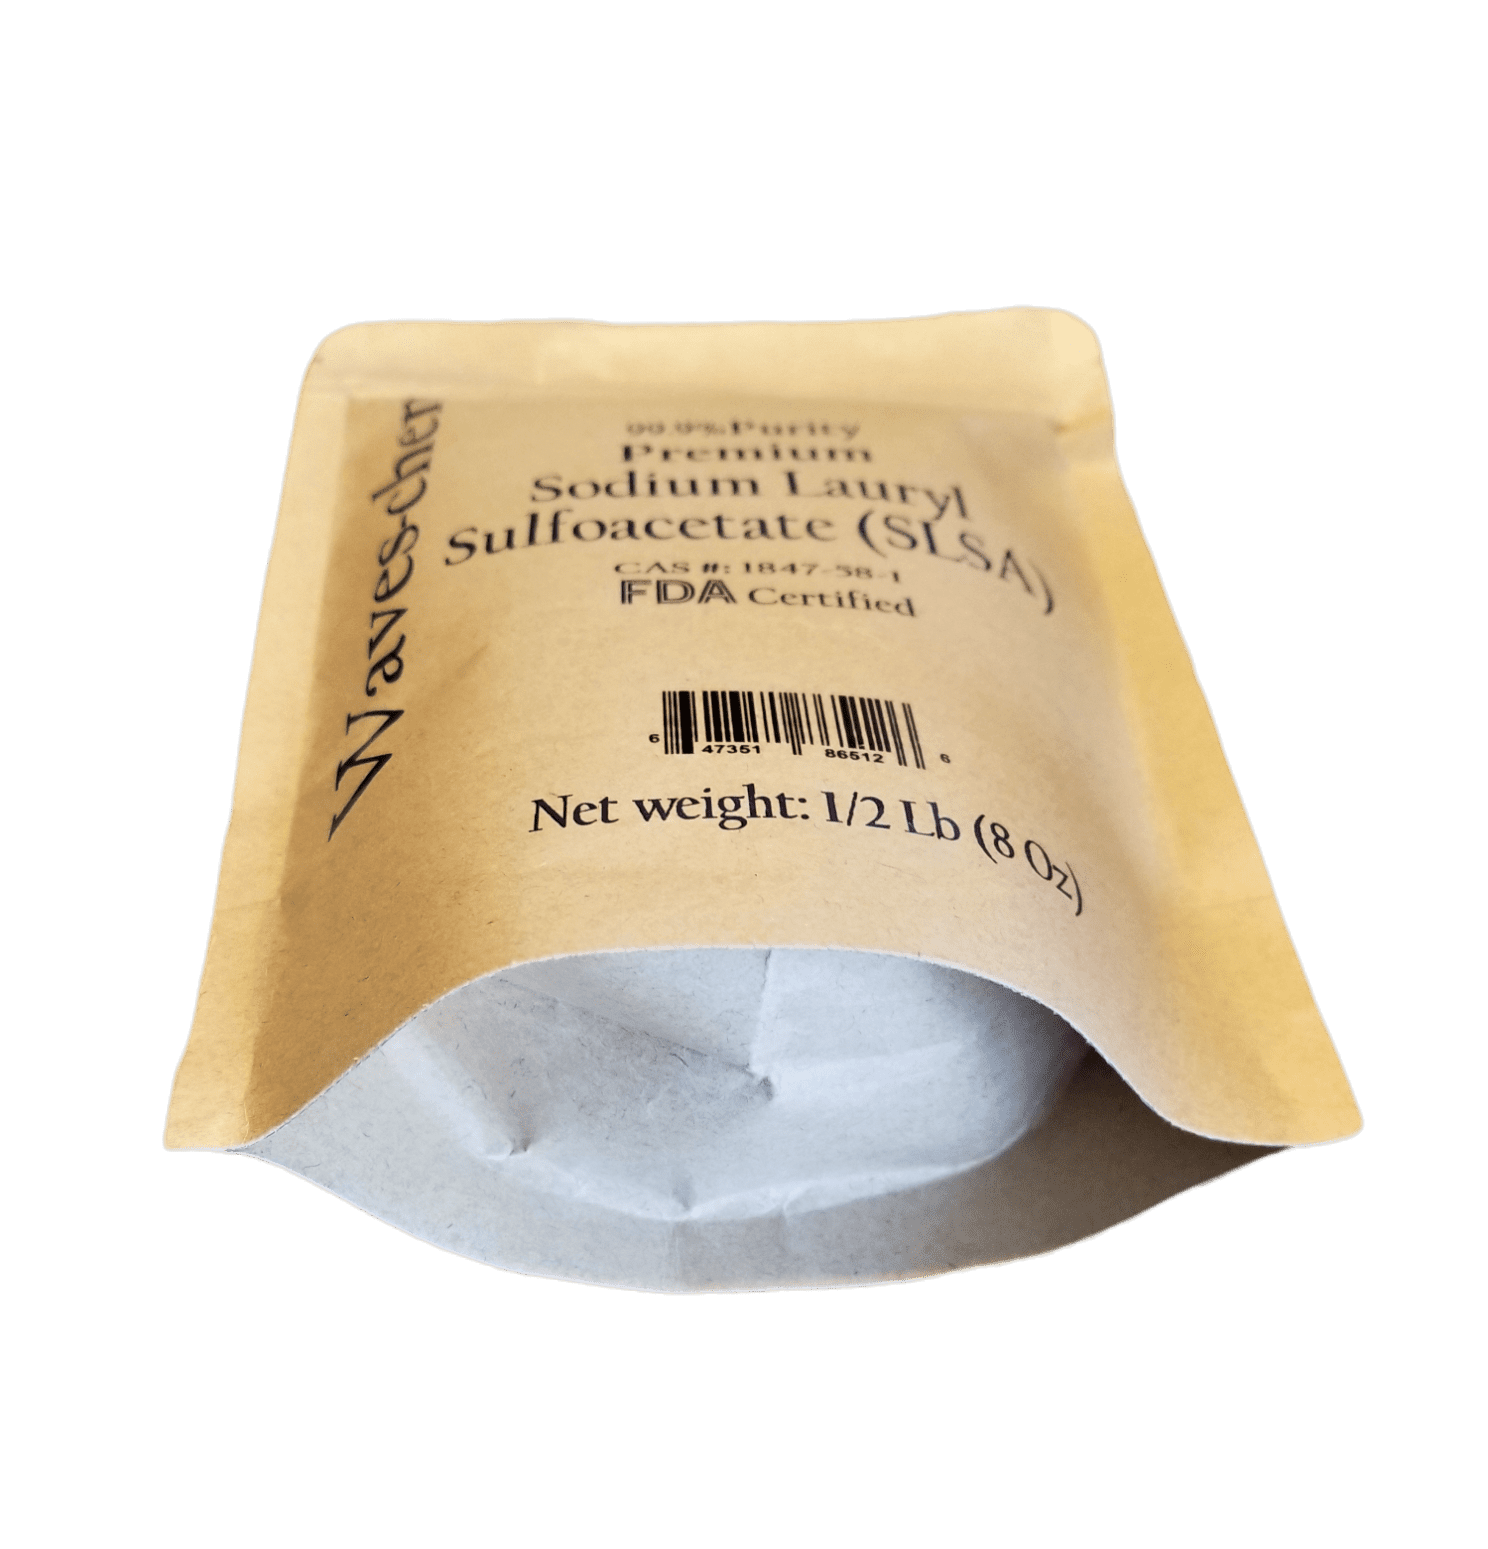  Waves-chem 1 lb Sodium lauryl Sulfoacetate (SLSA) Non